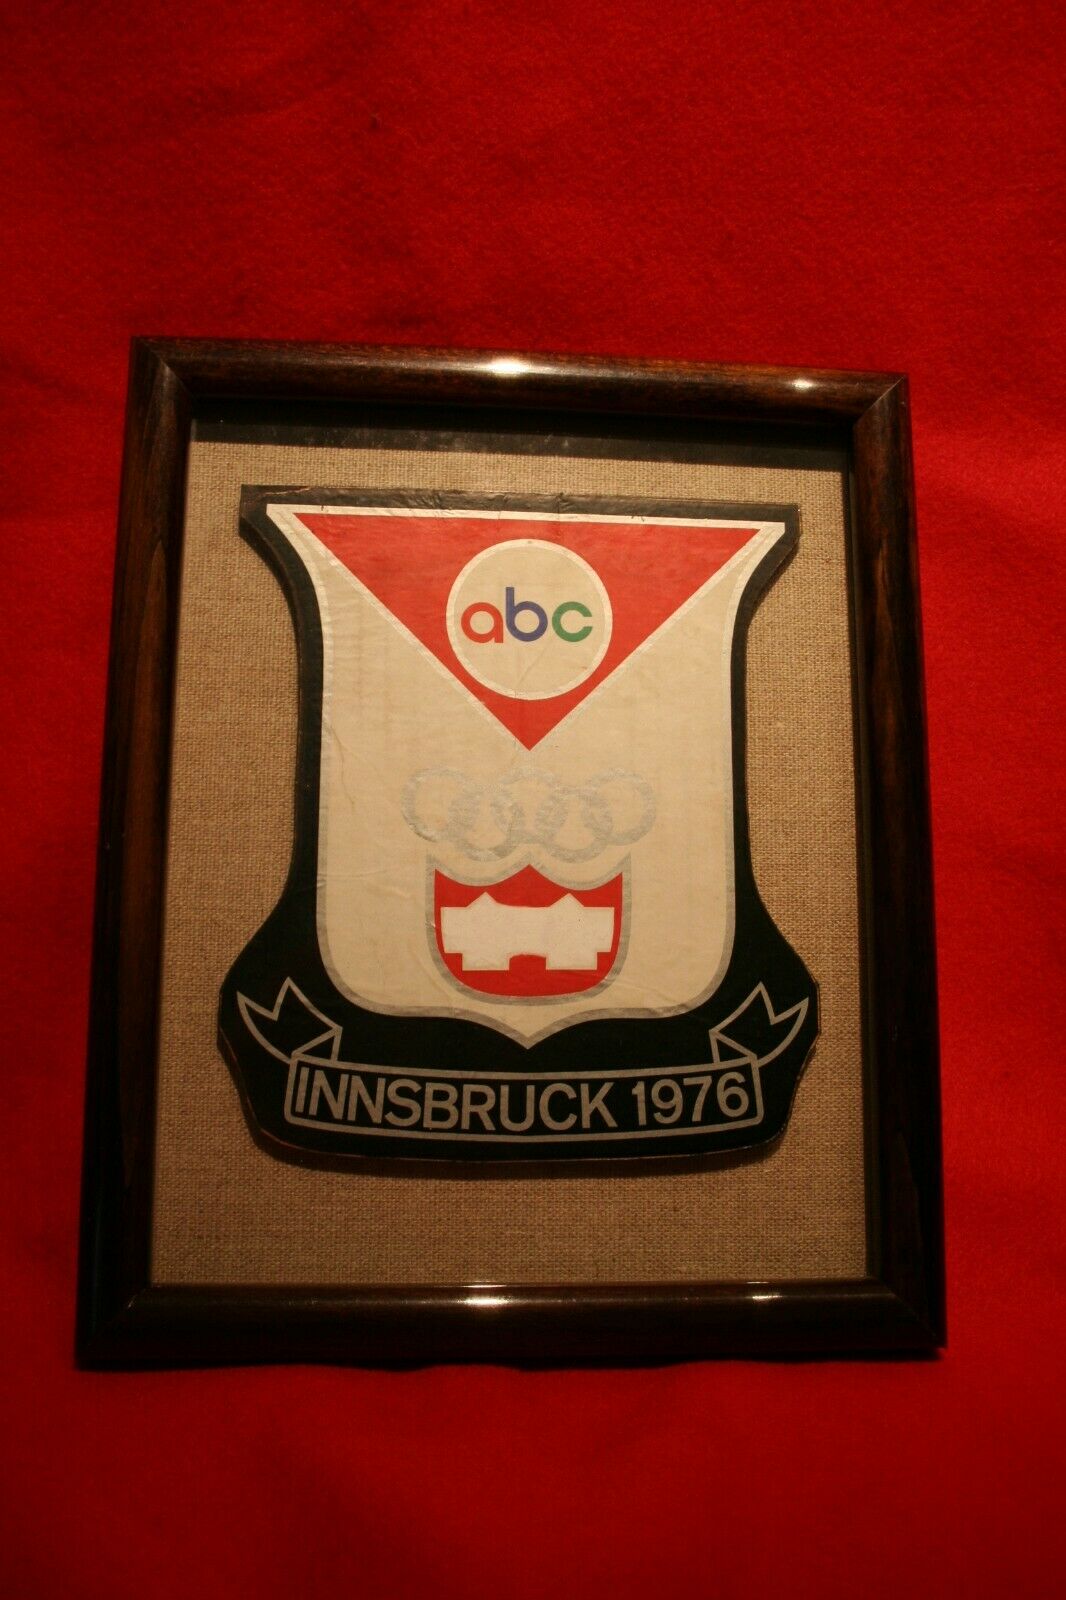 Vintage, Original Abc Sports Innsbruck 1976 Olympics And 1988 Calgary Olympics